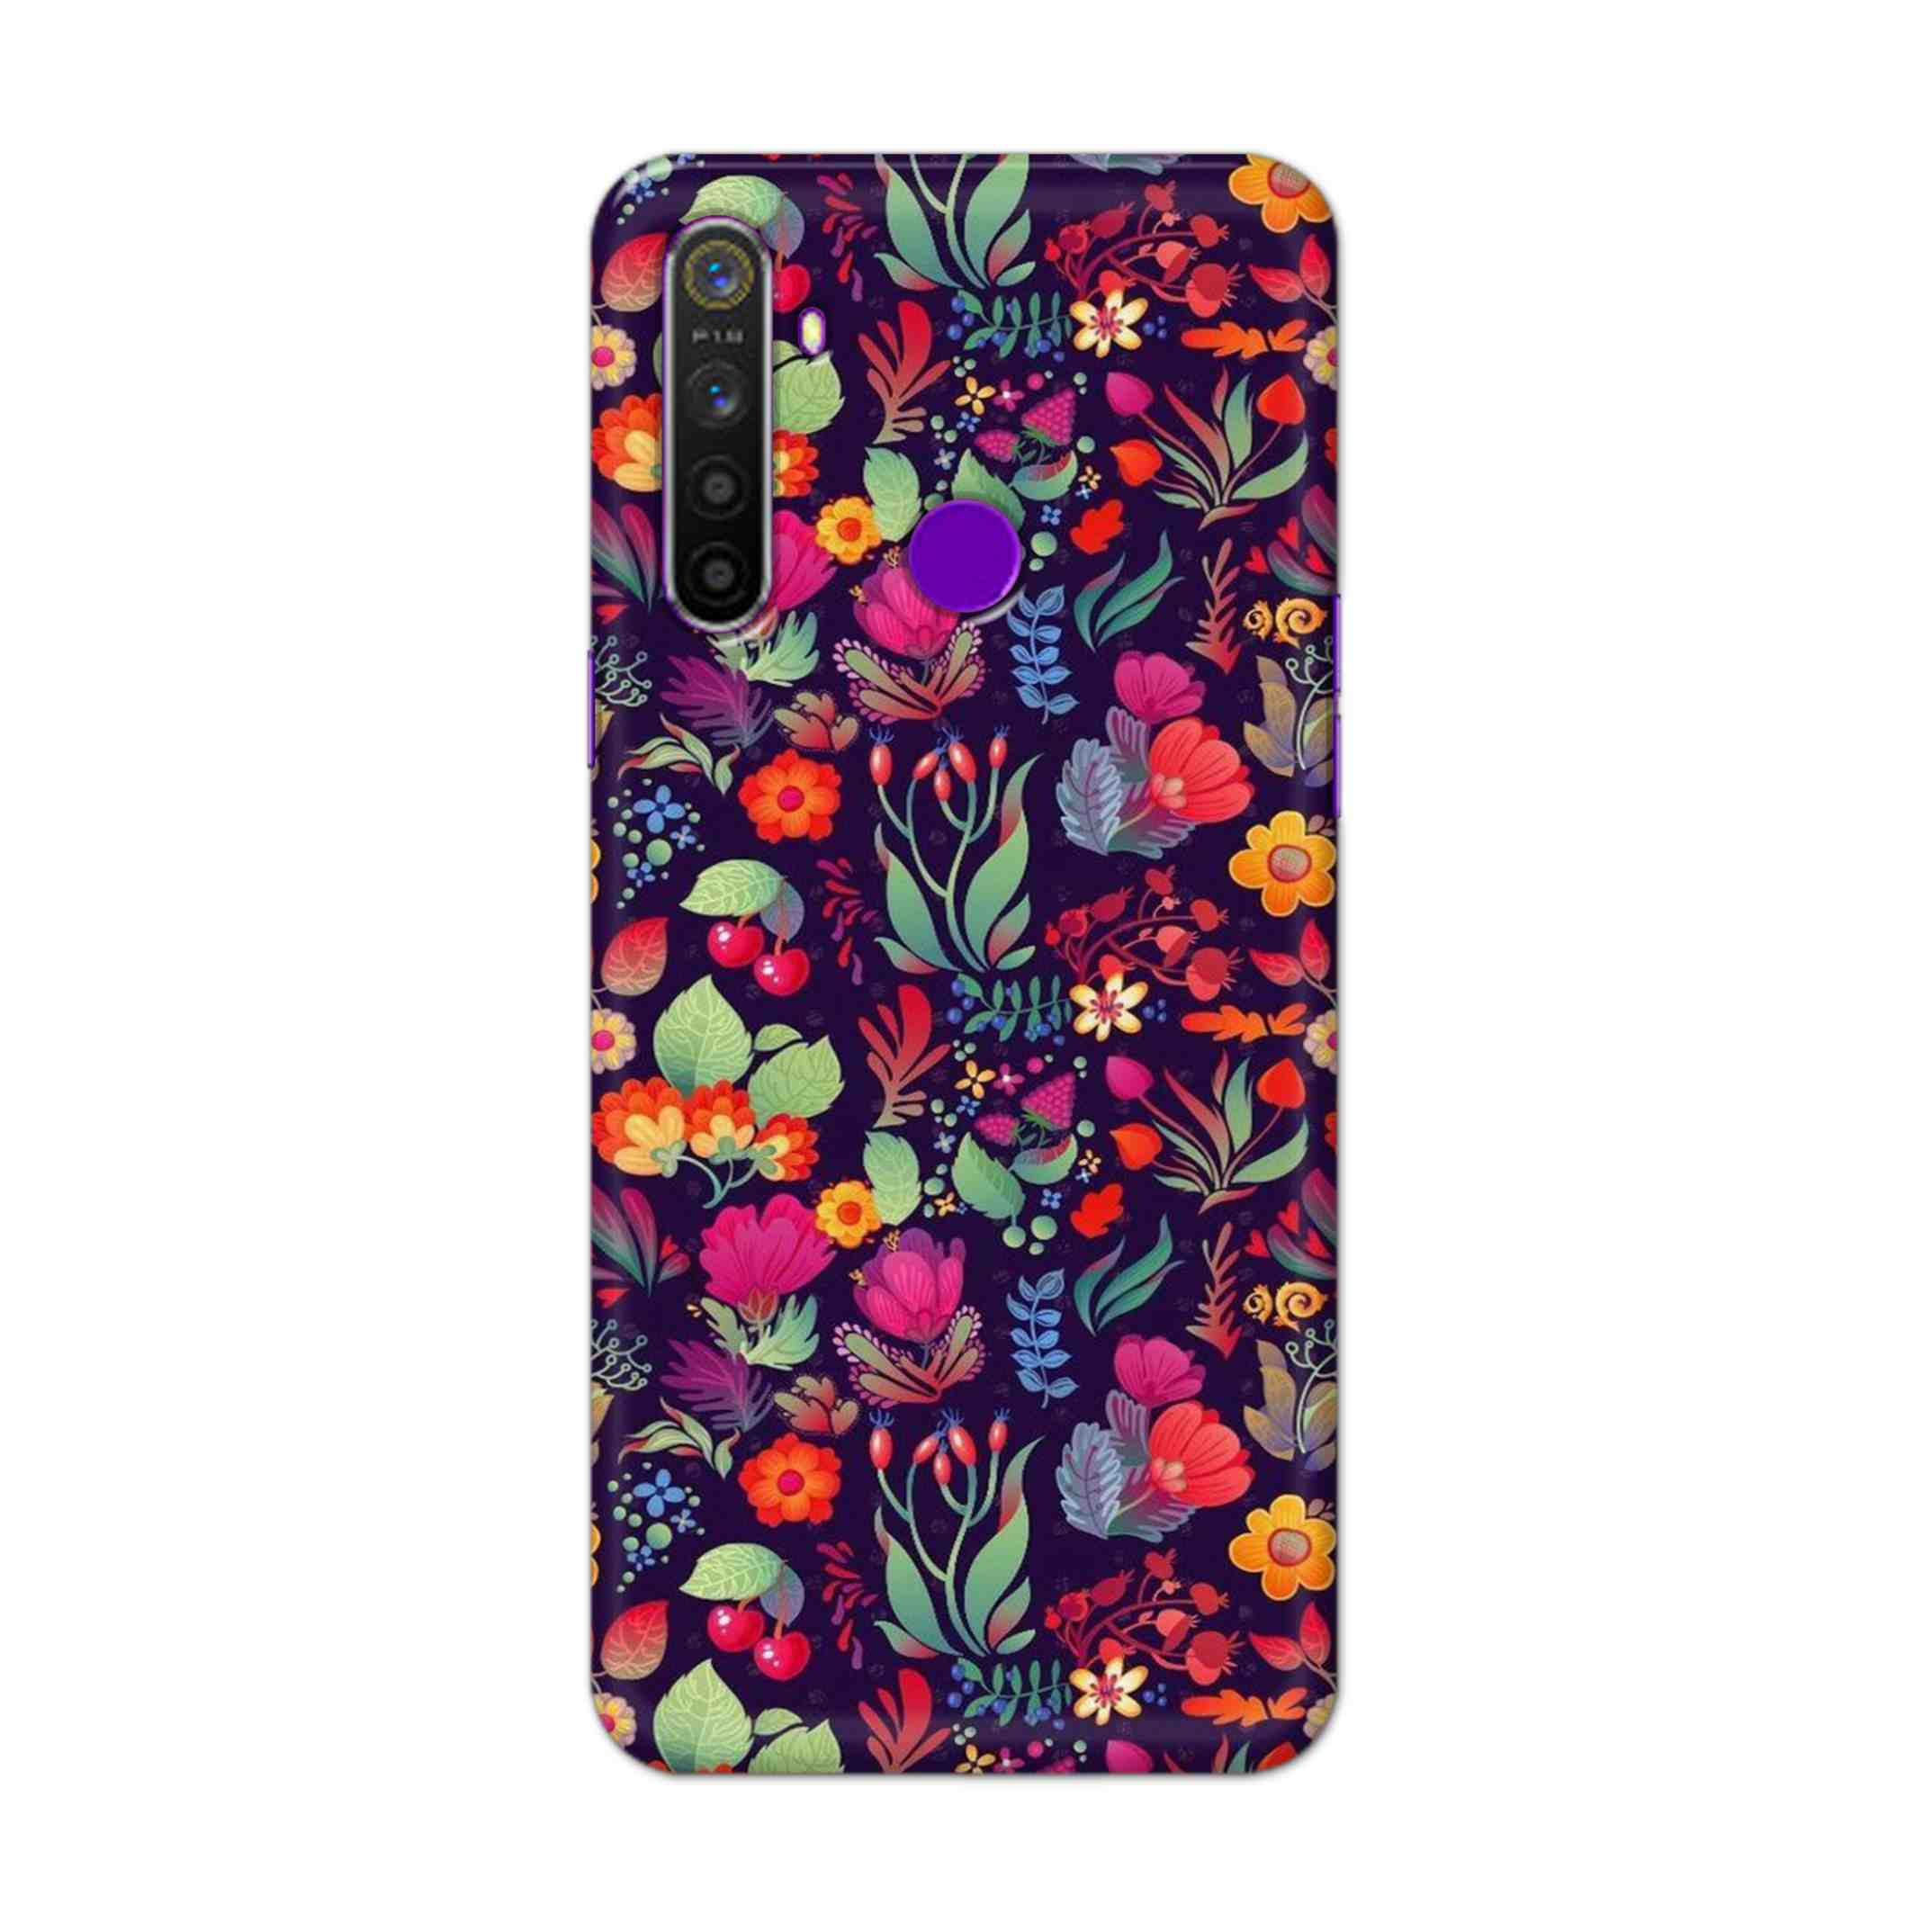 Buy Fruits Flower Hard Back Mobile Phone Case Cover For Realme 5 Pro Online